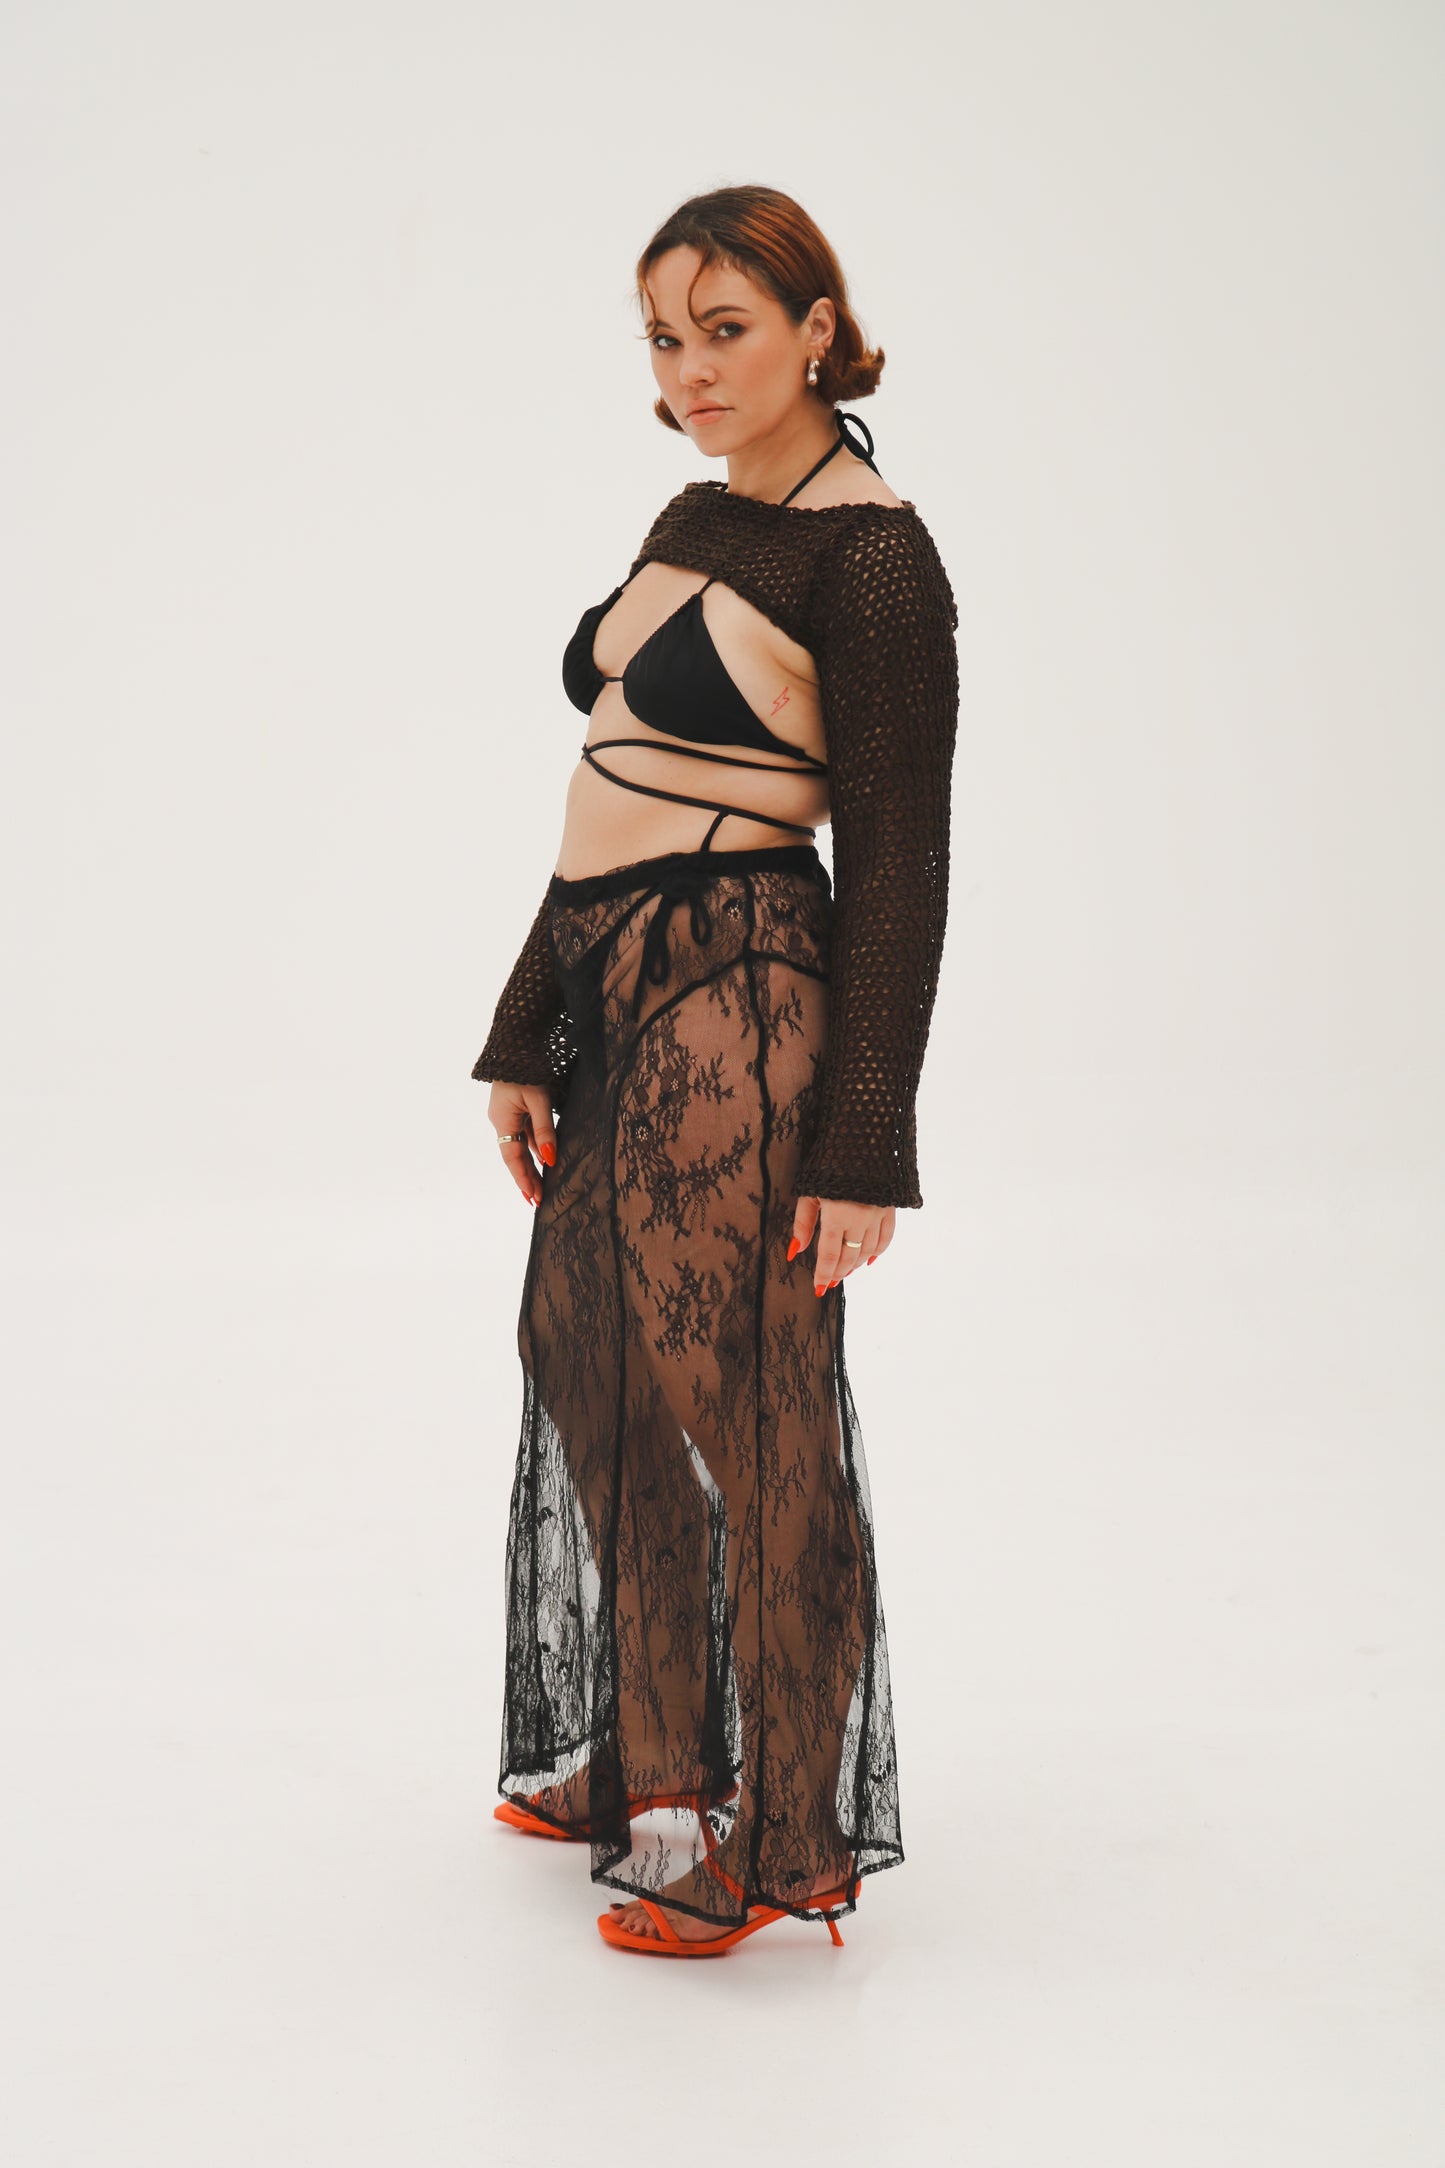 Nova Skirt - Lace